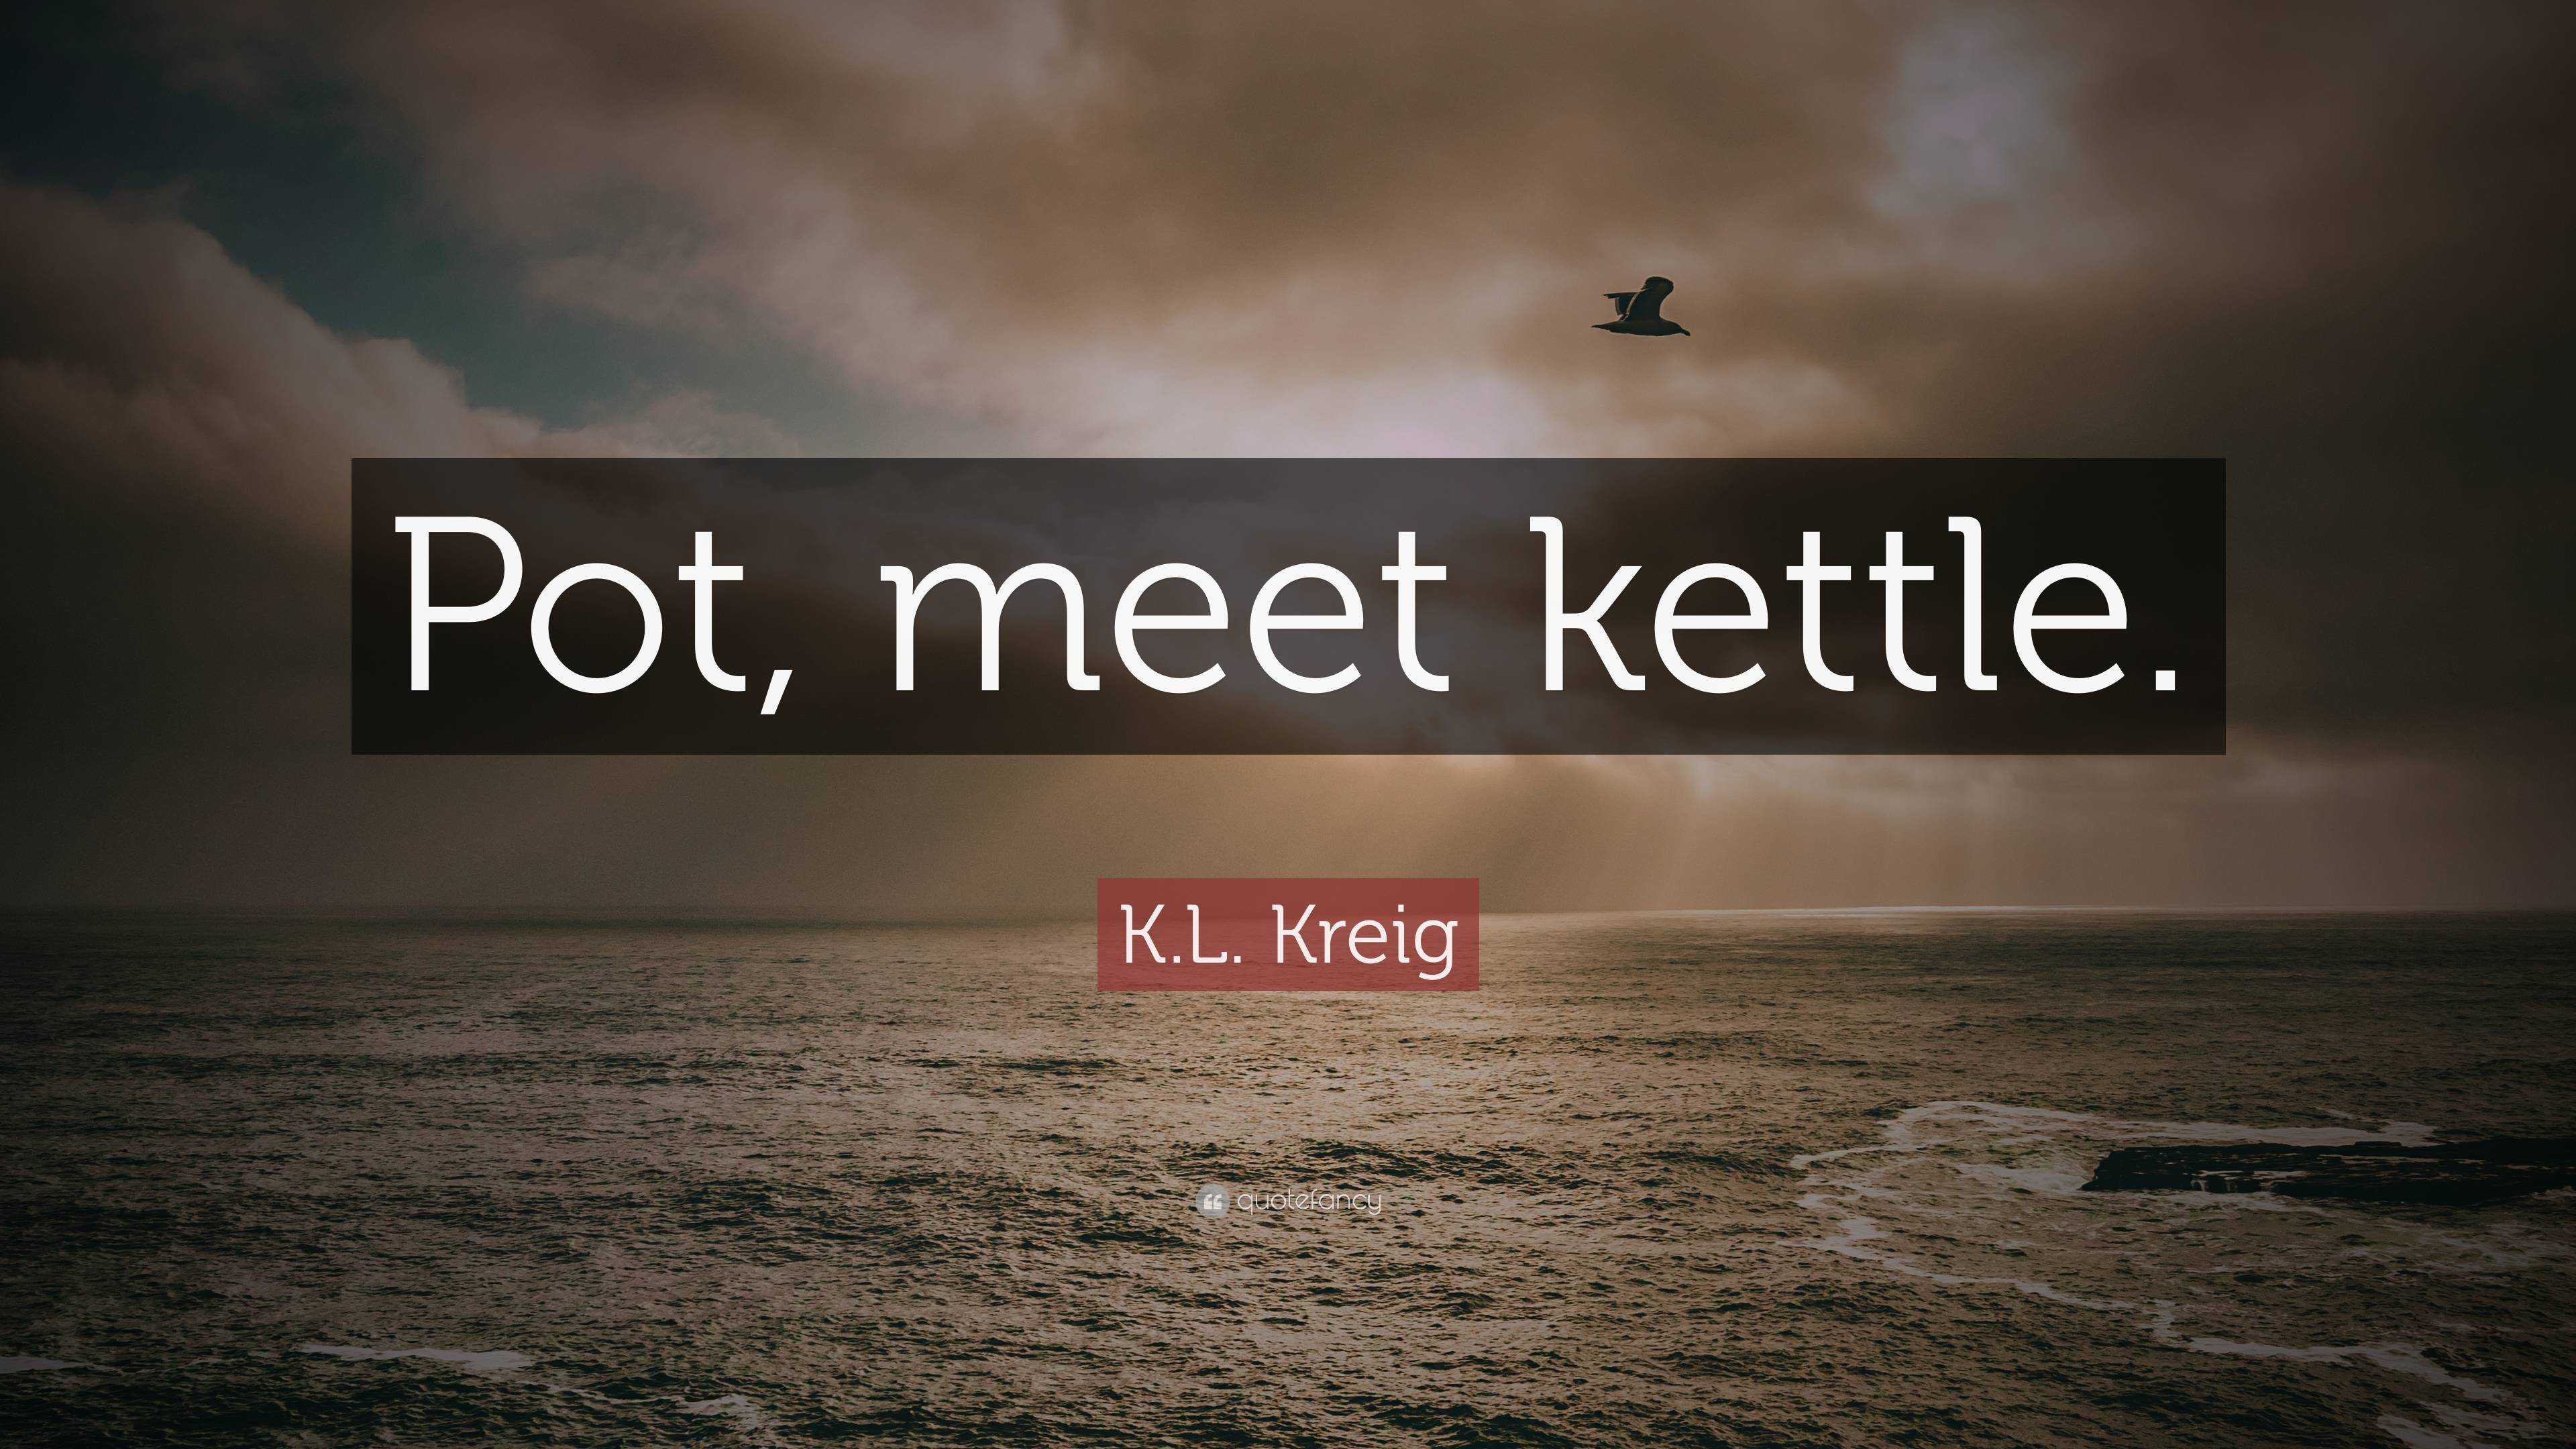 Ithaca tong nikkel K.L. Kreig Quote: “Pot, meet kettle.”